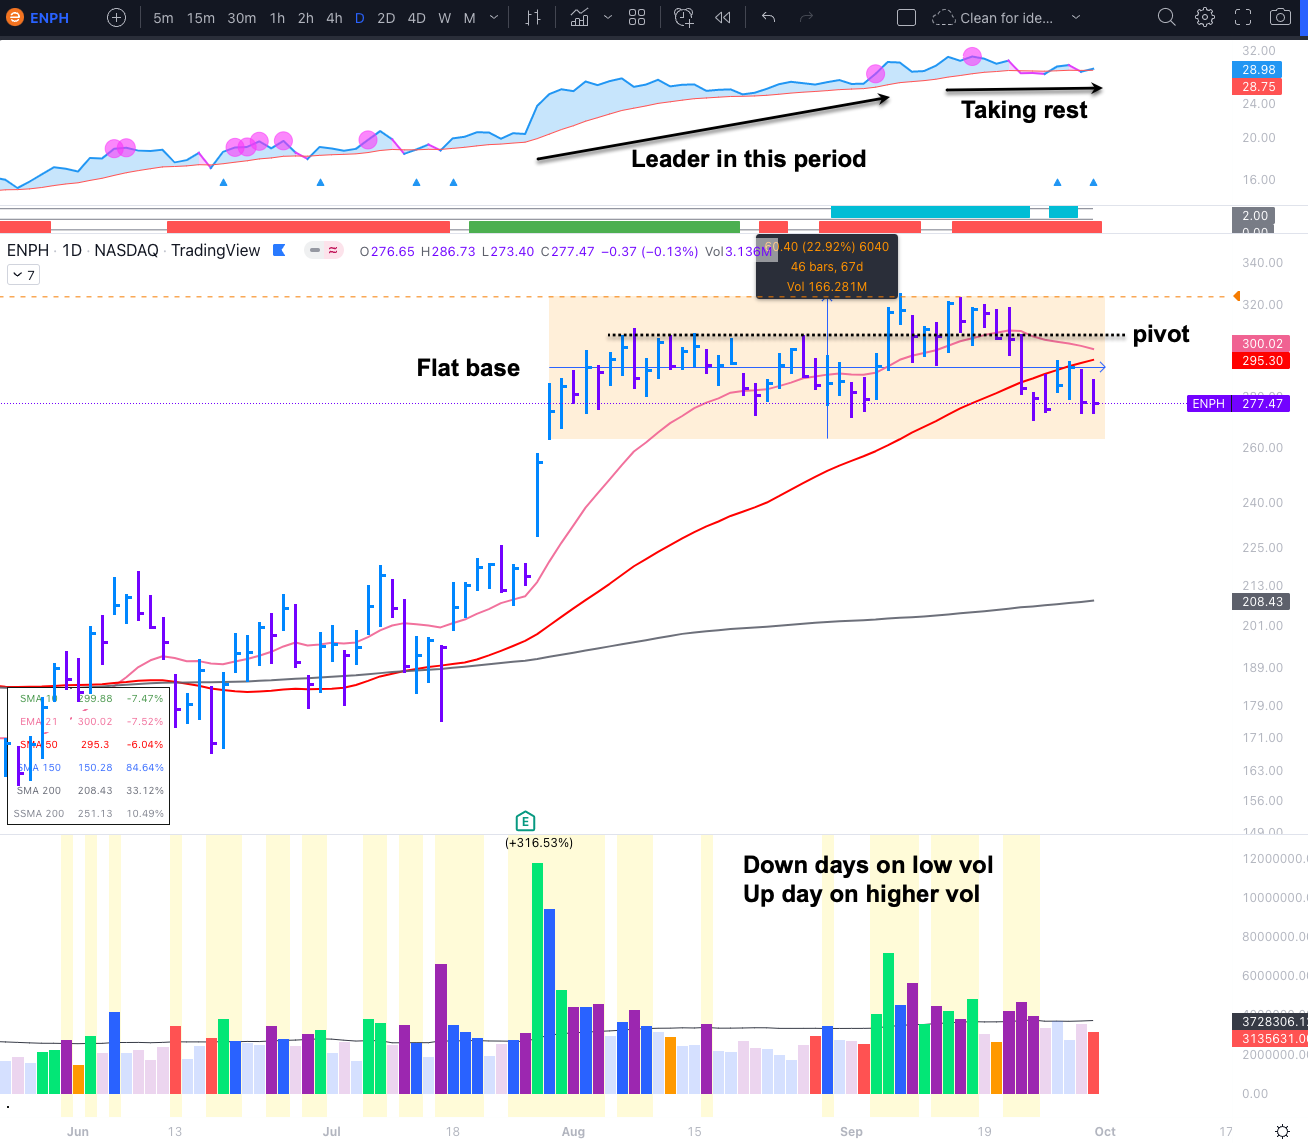 ENPH chart tradingview